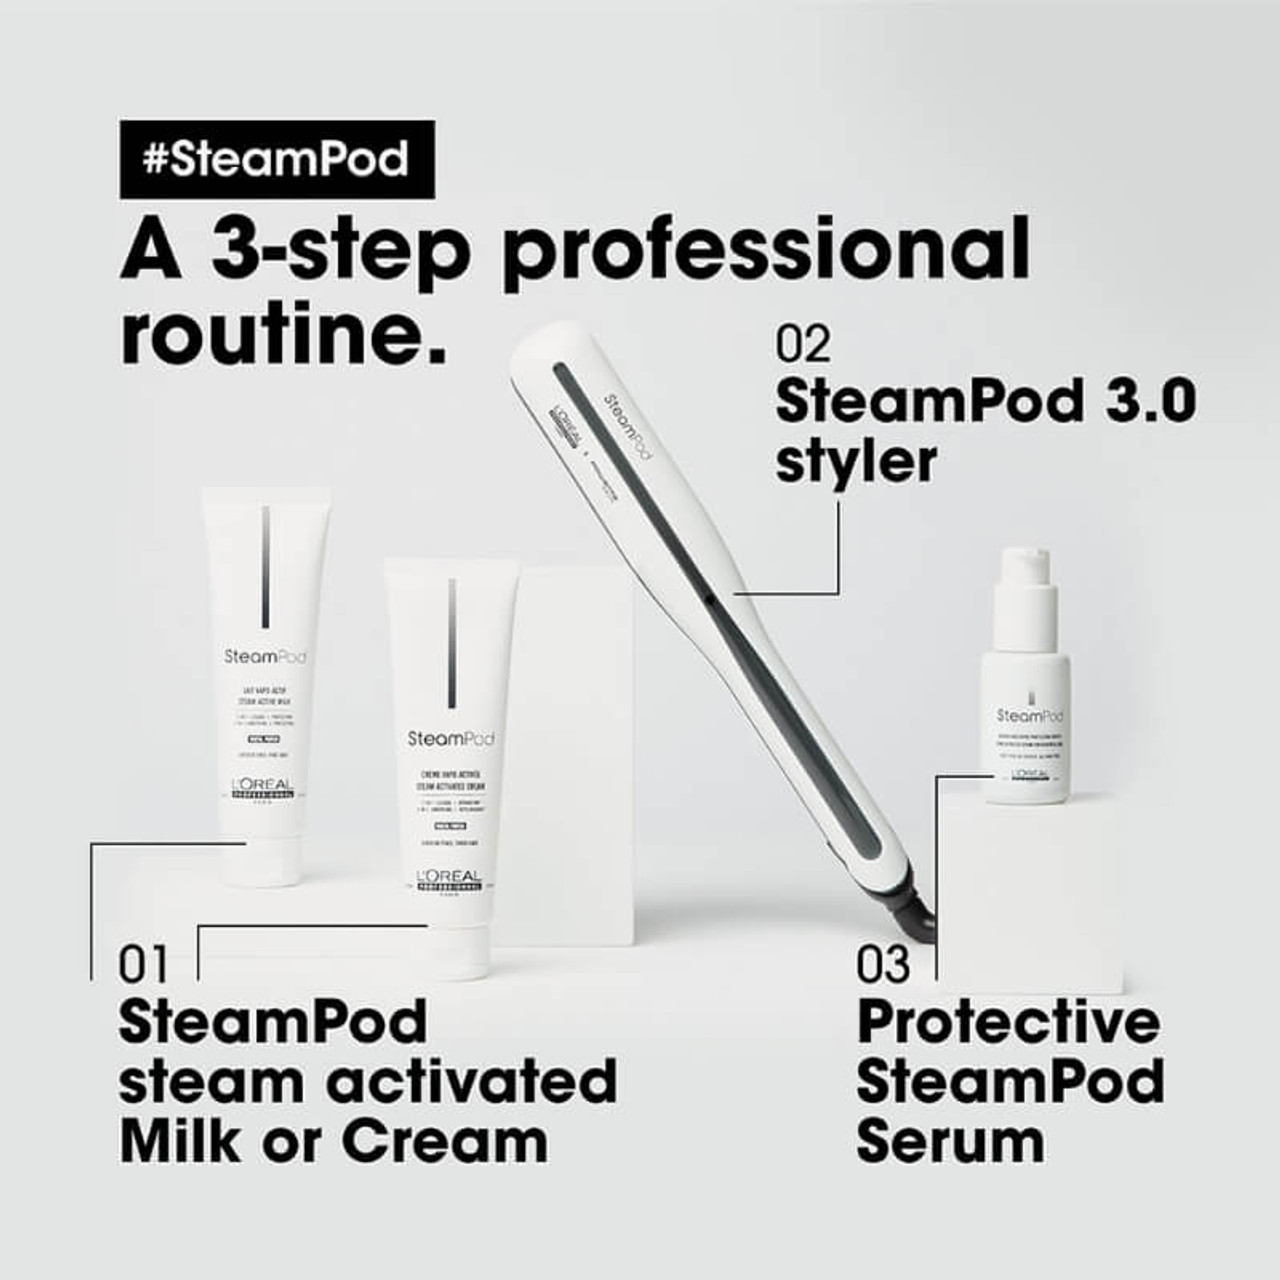 Introducing L'Oréal Steampod 4 